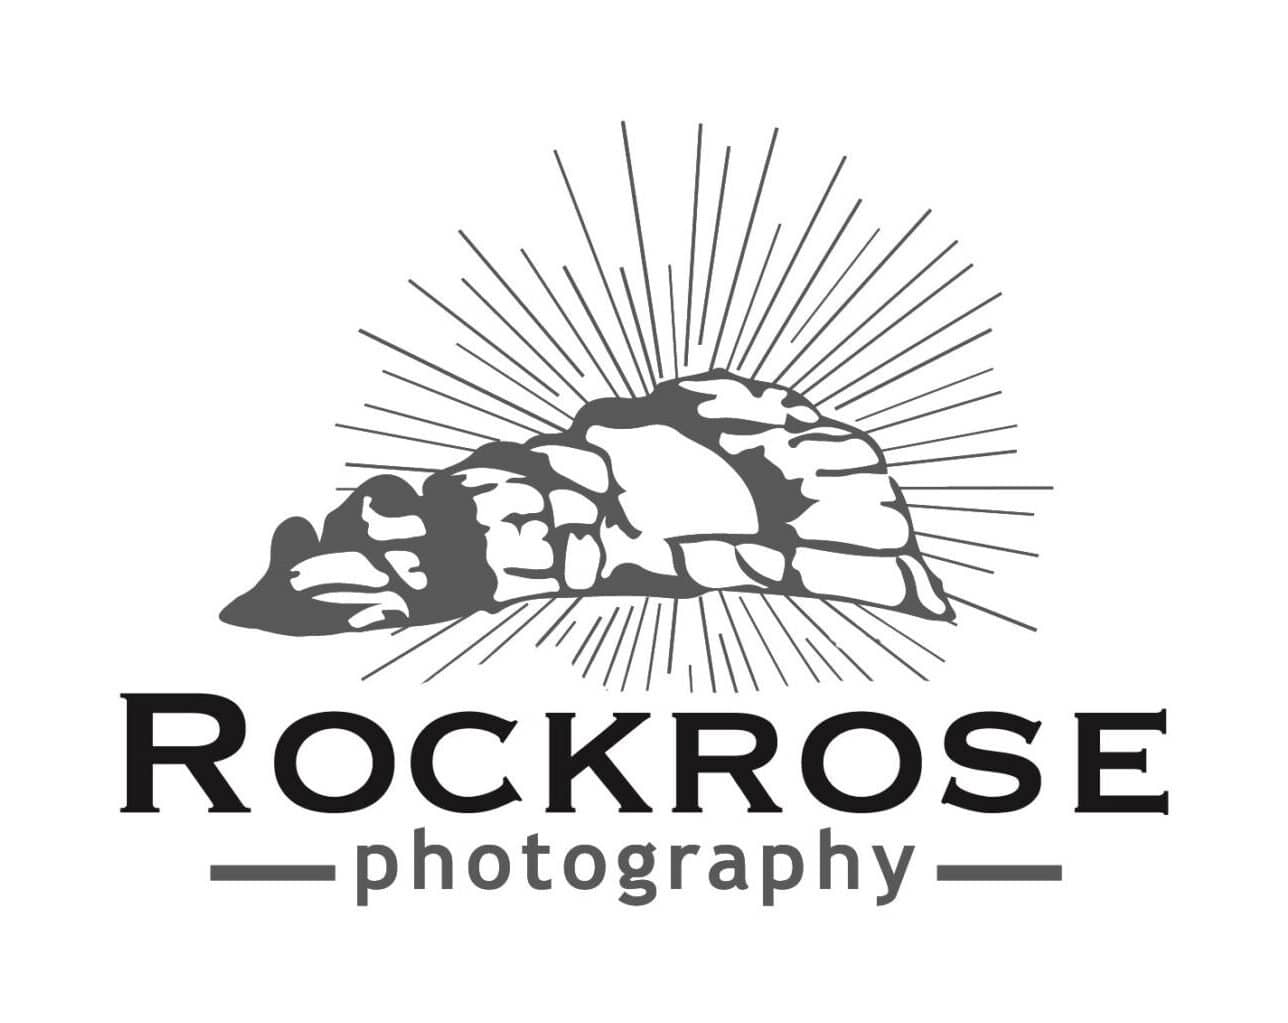 Rockrose photography